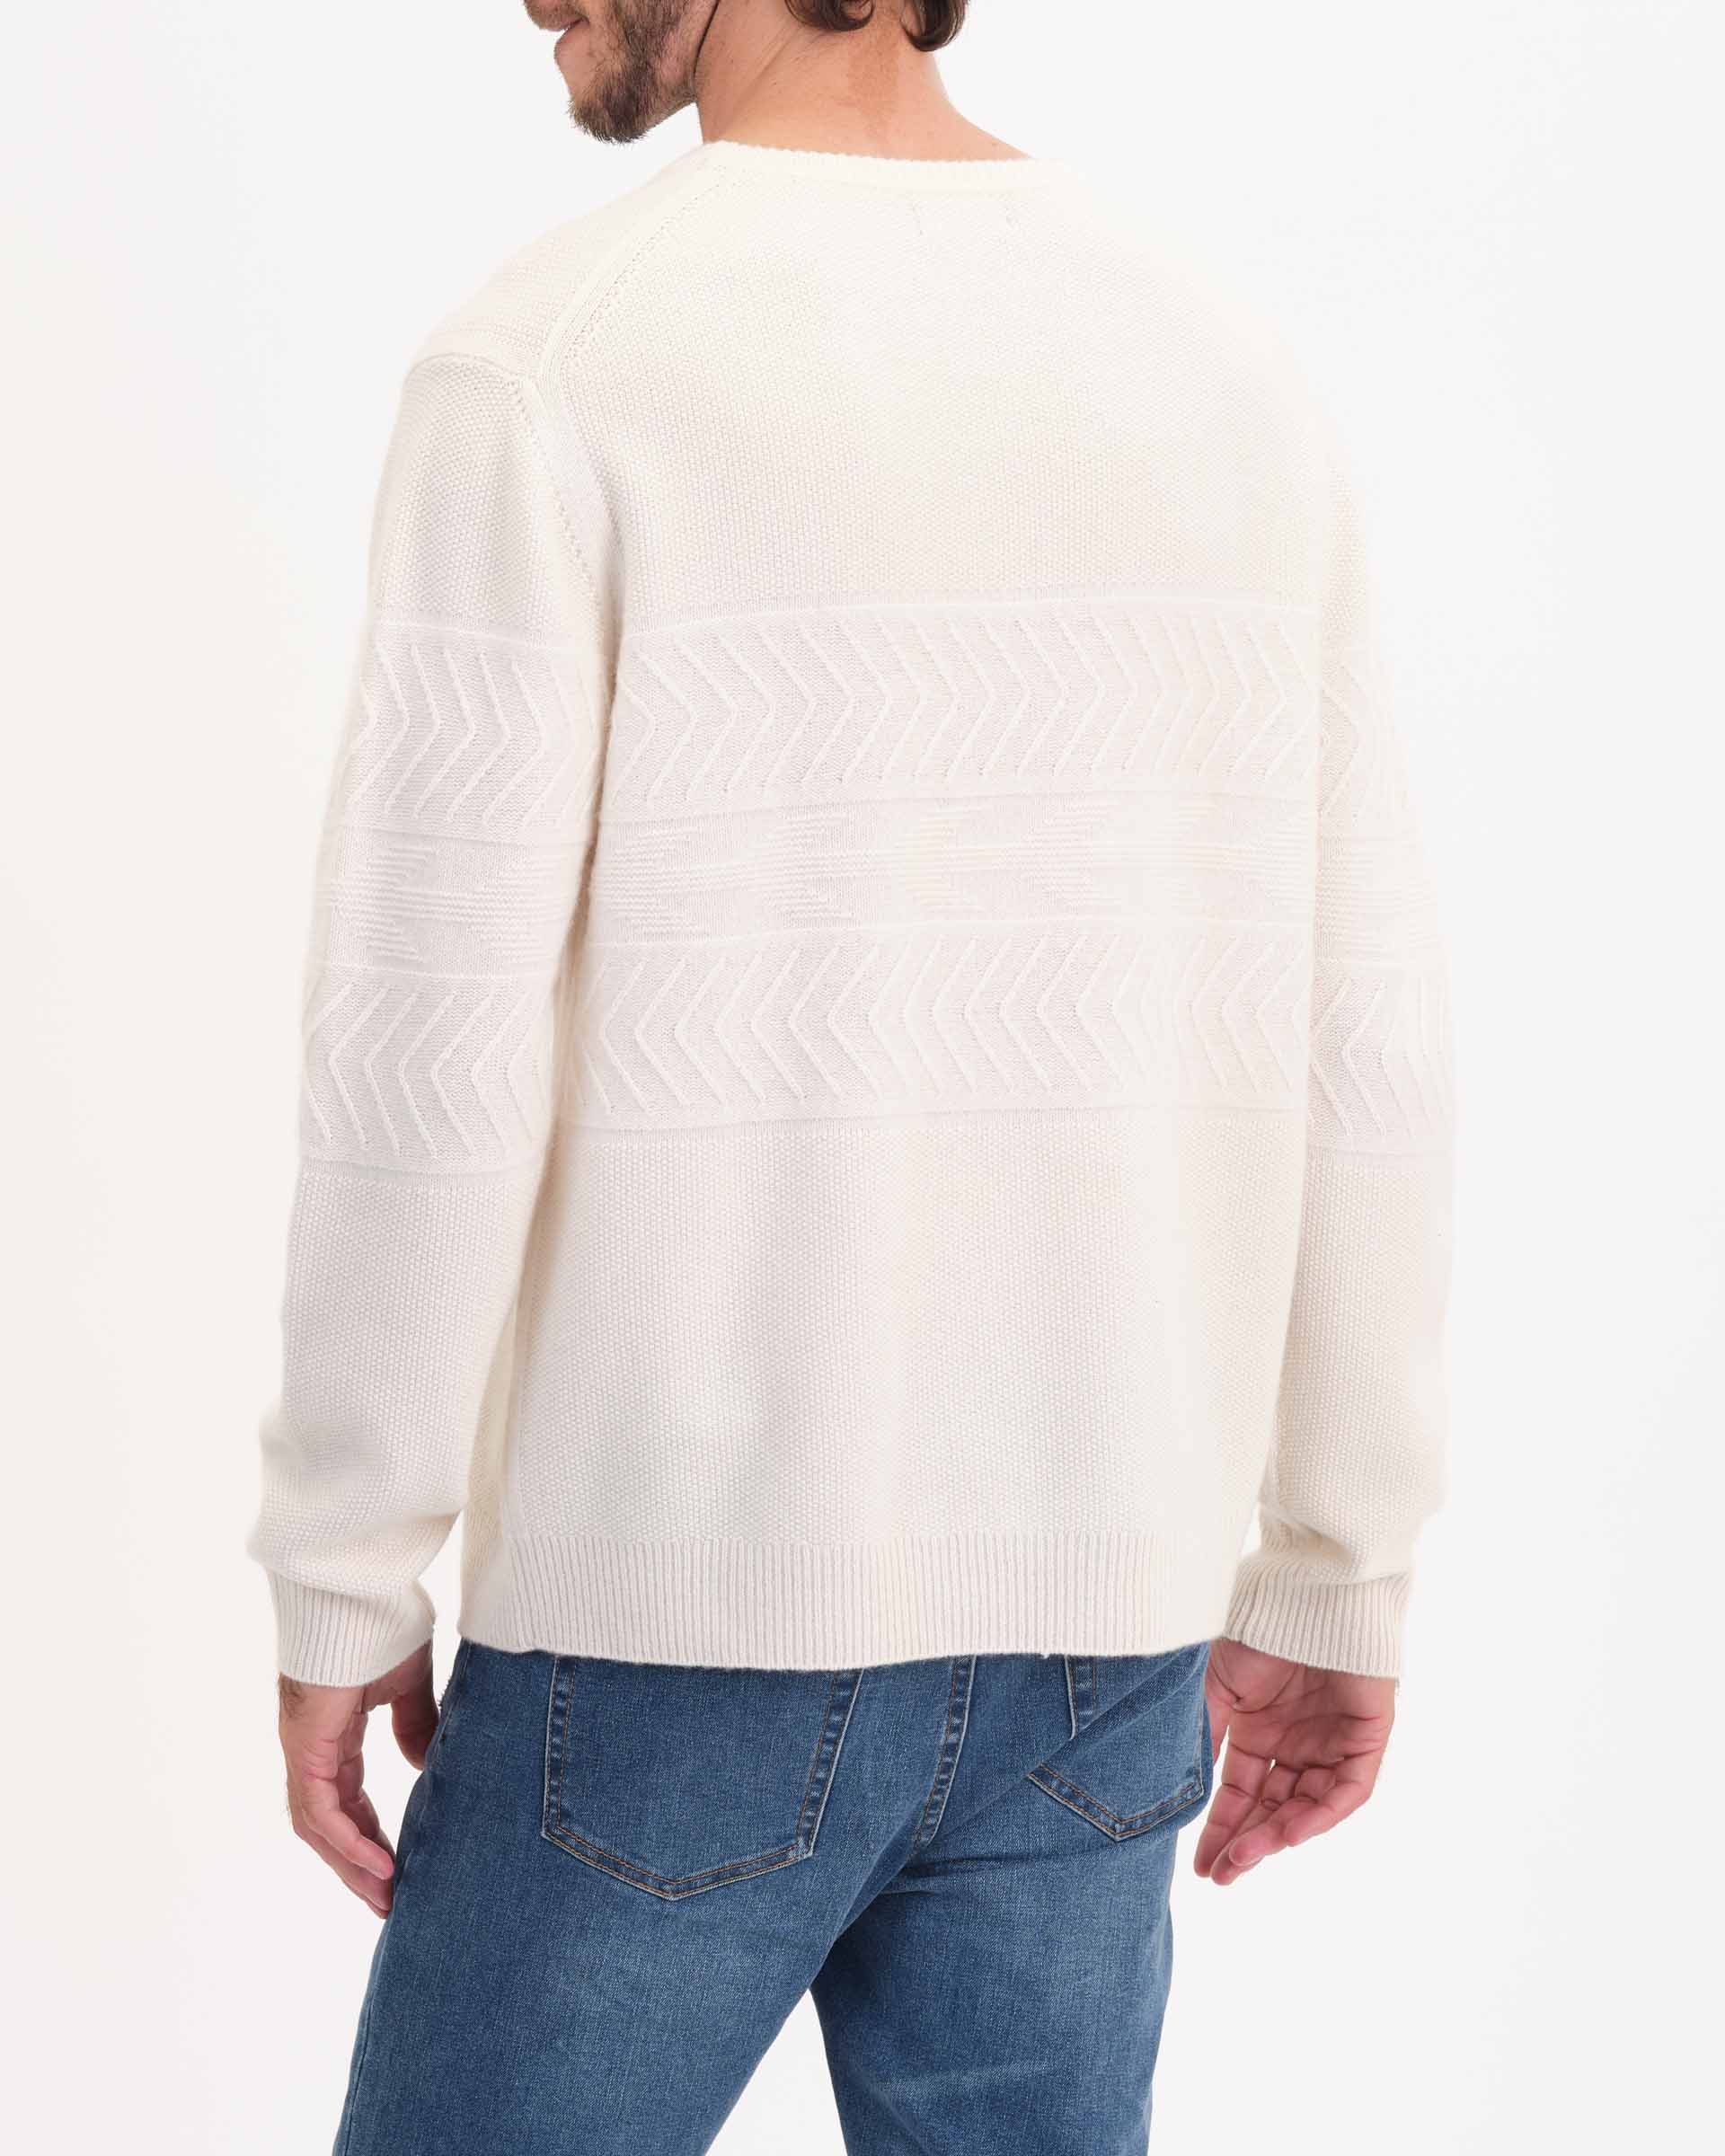 Shop Men's Cashmere Fair Isle Pullover Sweater | Magaschoni Men | JANE + MERCER